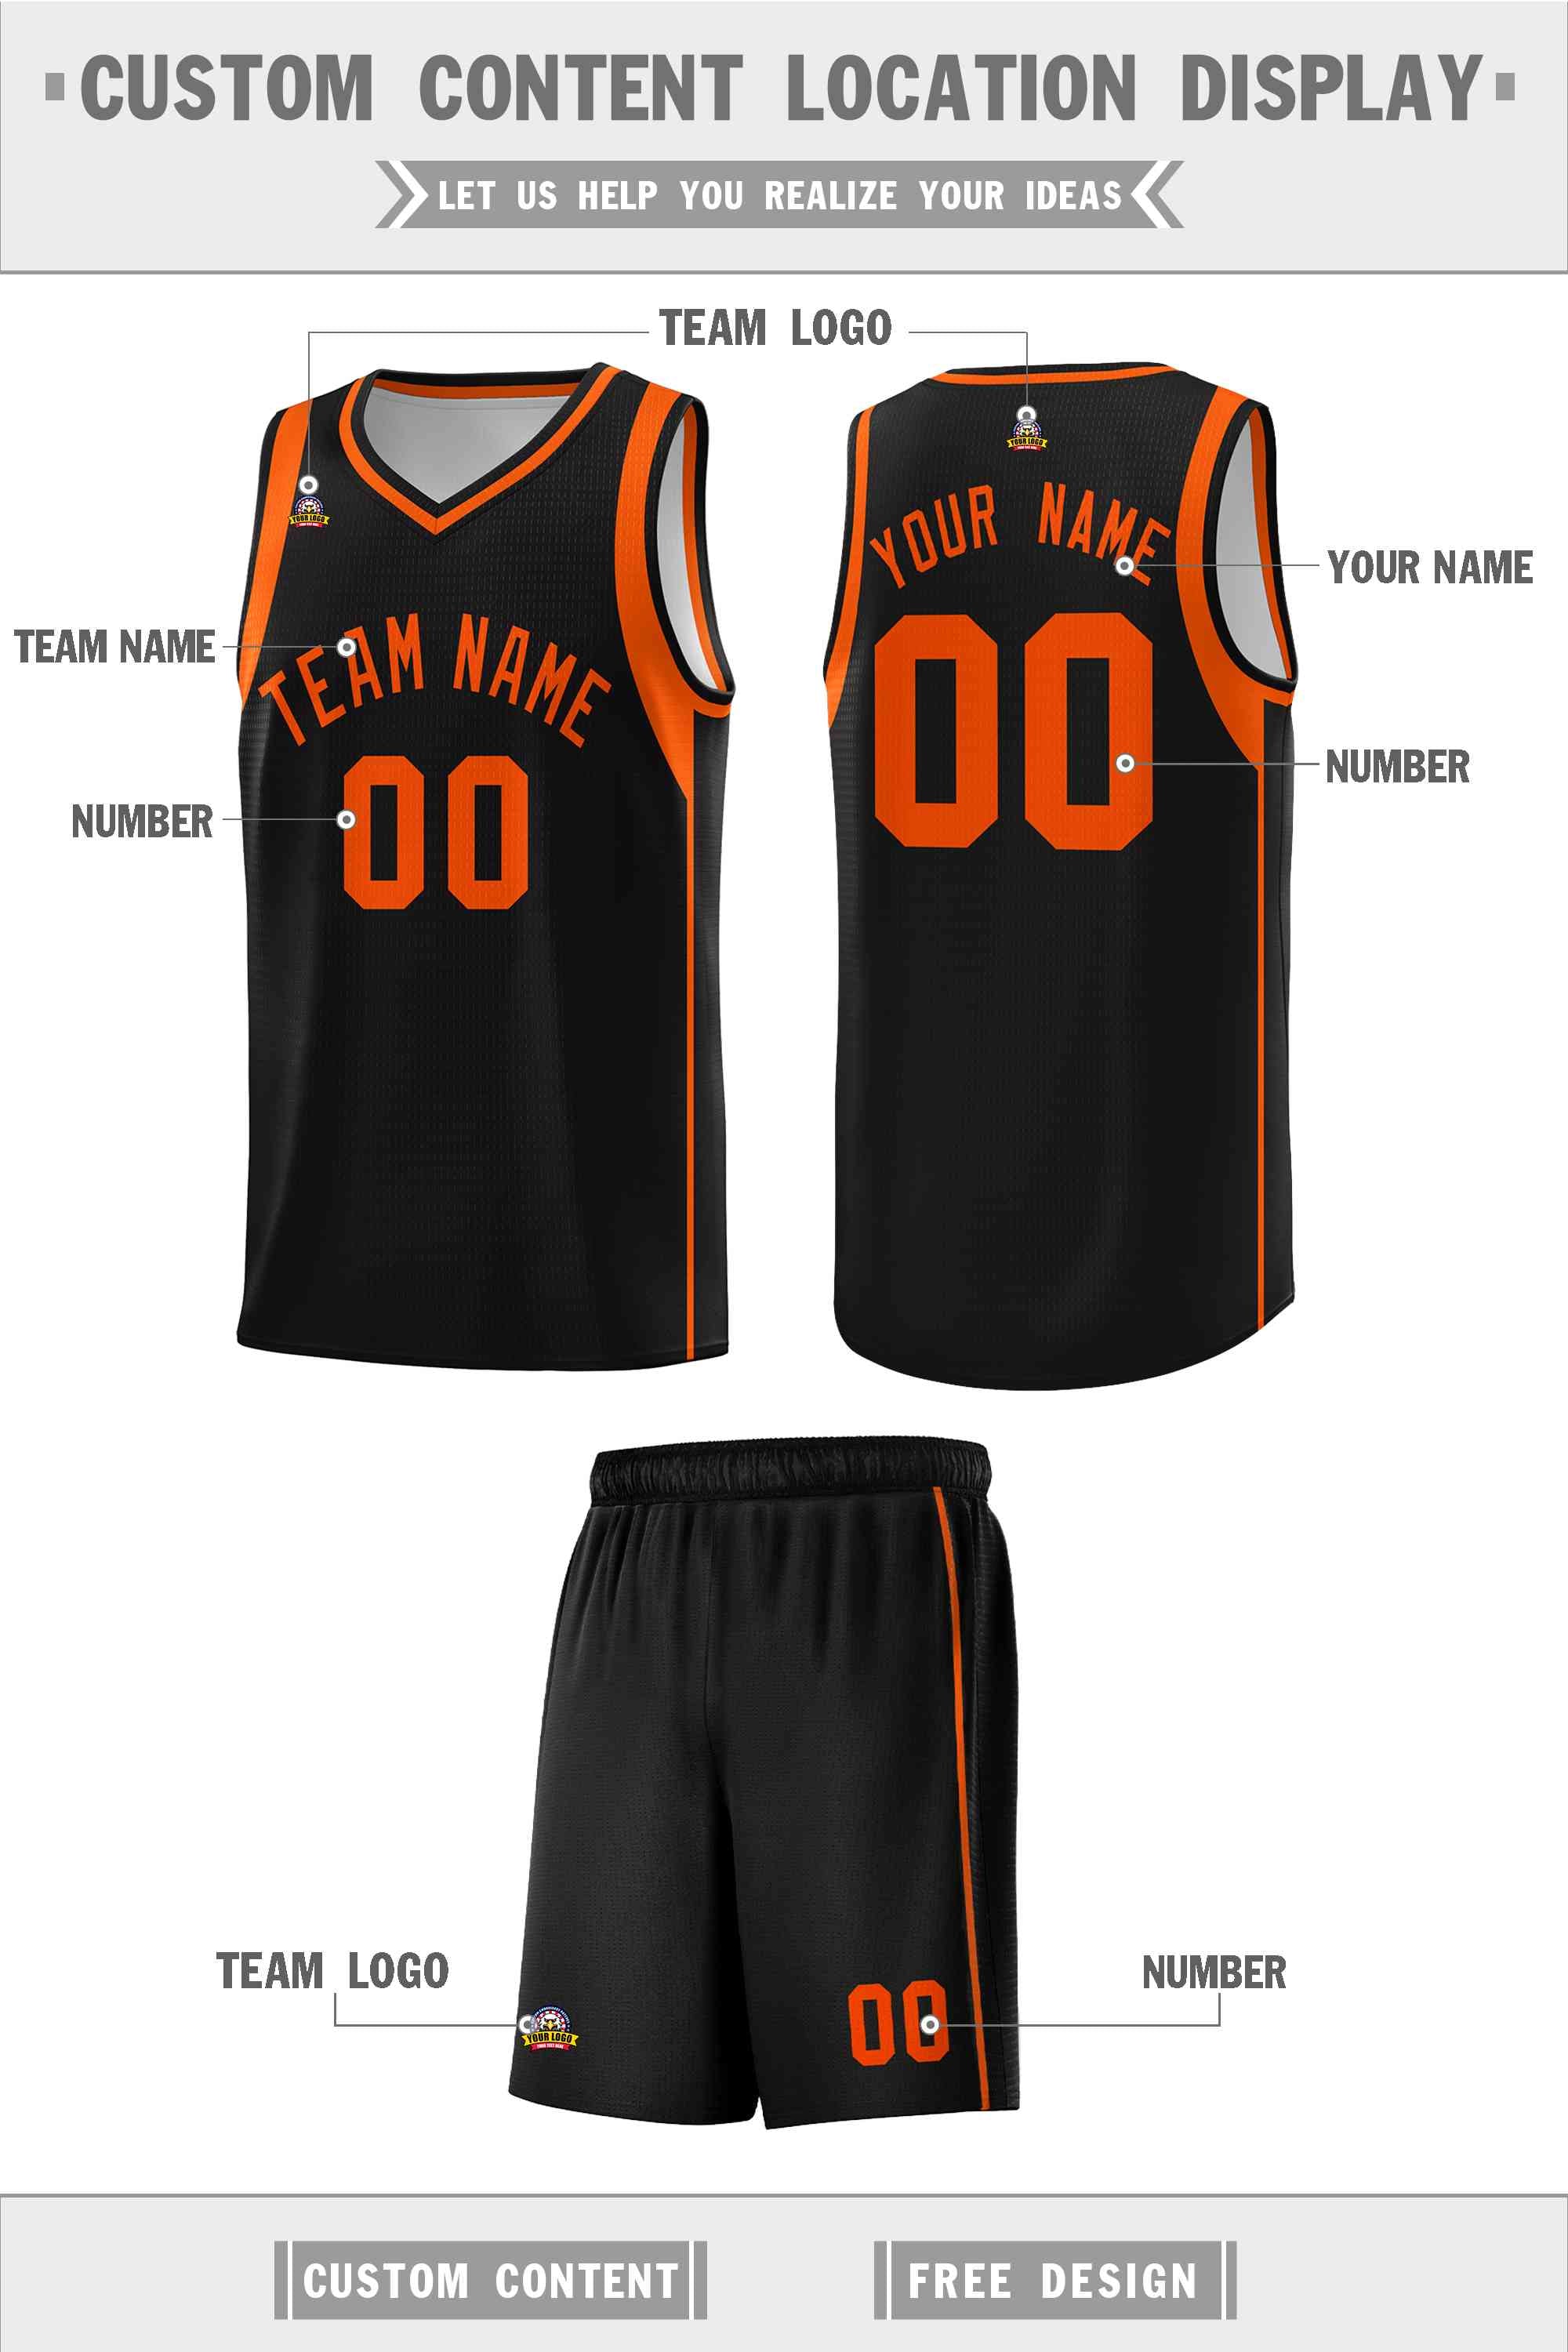 Custom Black Orange Sleeve Colorblocking Classic Sports Uniform Basketball Jersey